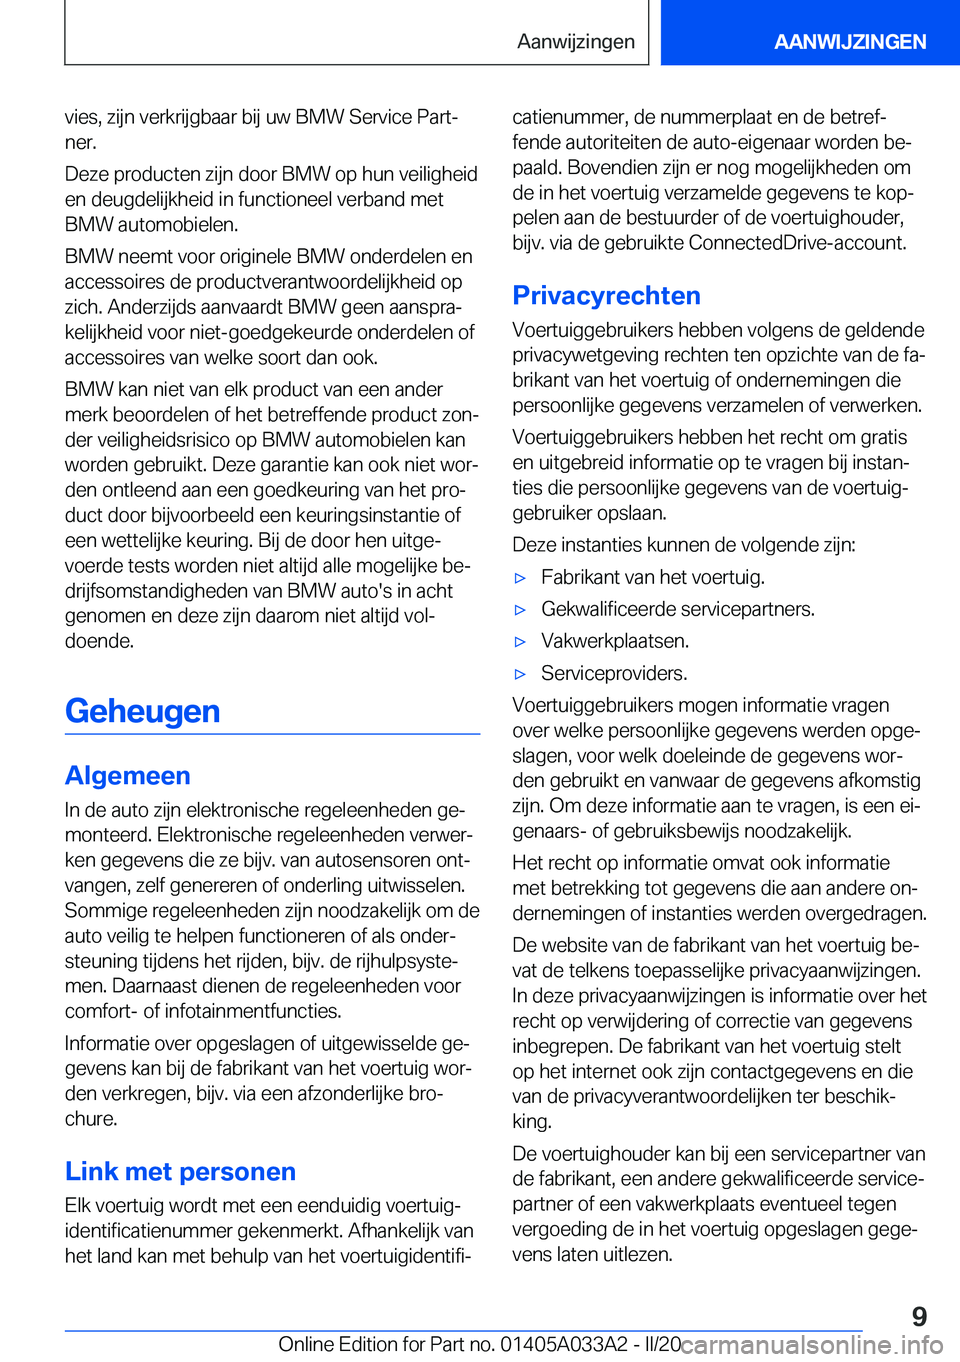 BMW M8 GRAN COUPE 2020  Instructieboekjes (in Dutch) �v�i�e�s�,��z�i�j�n��v�e�r�k�r�i�j�g�b�a�a�r��b�i�j��u�w��B�M�W��S�e�r�v�i�c�e��P�a�r�tj
�n�e�r�.
�D�e�z�e��p�r�o�d�u�c�t�e�n��z�i�j�n��d�o�o�r��B�M�W��o�p��h�u�n��v�e�i�l�i�g�h�e�i�d �